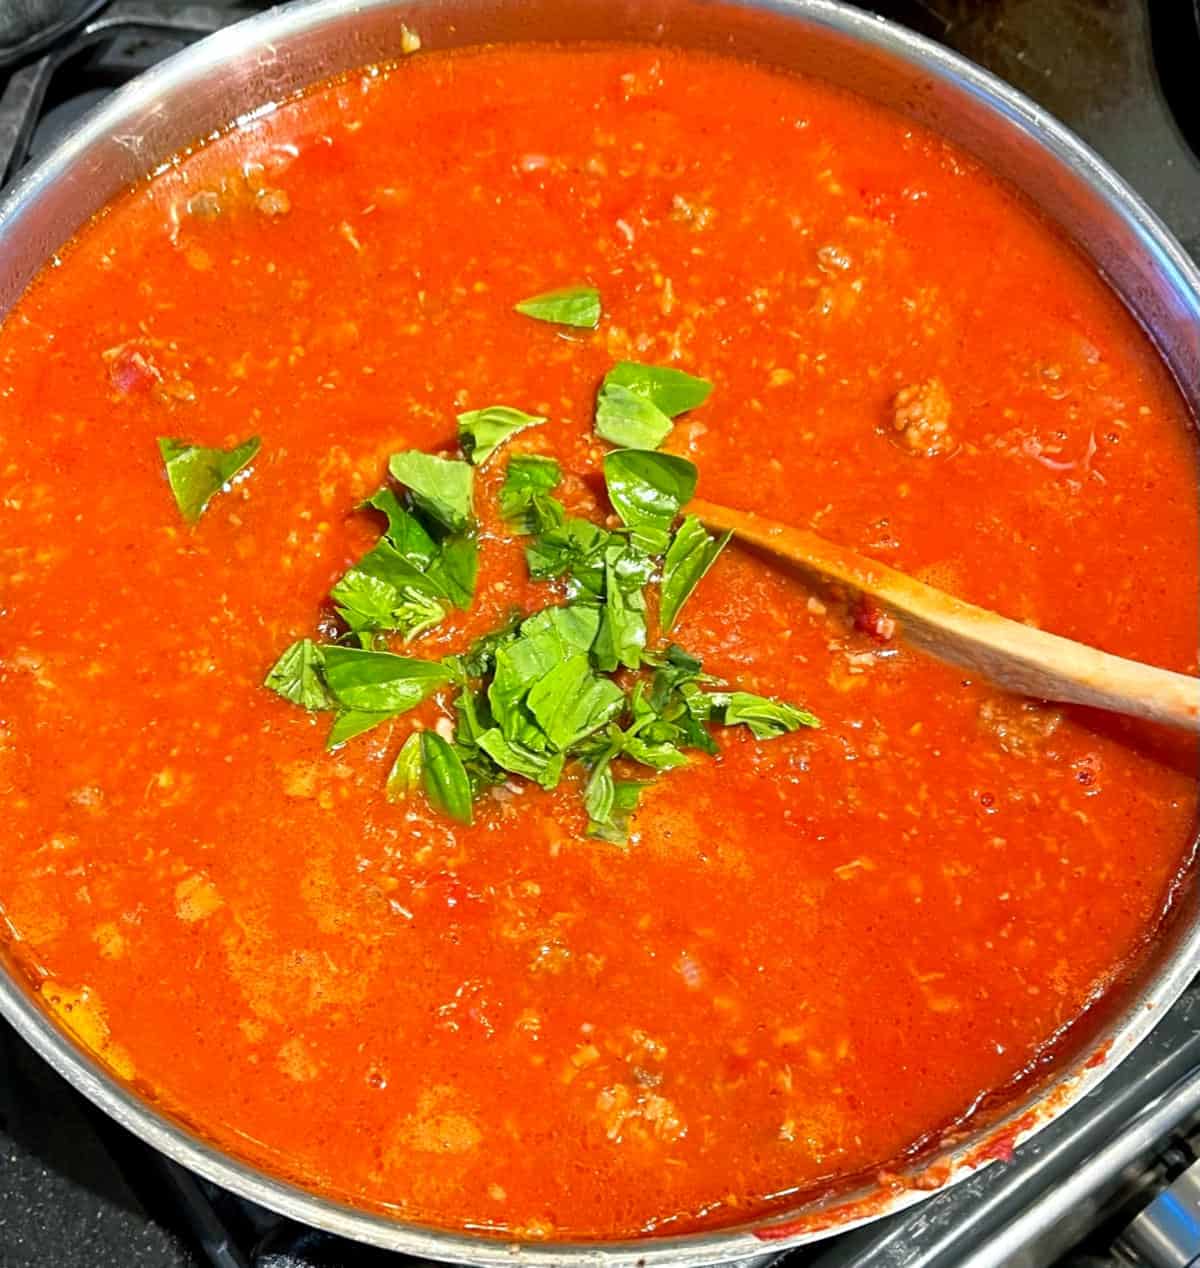 Basil and oregano added to tomato sauce.